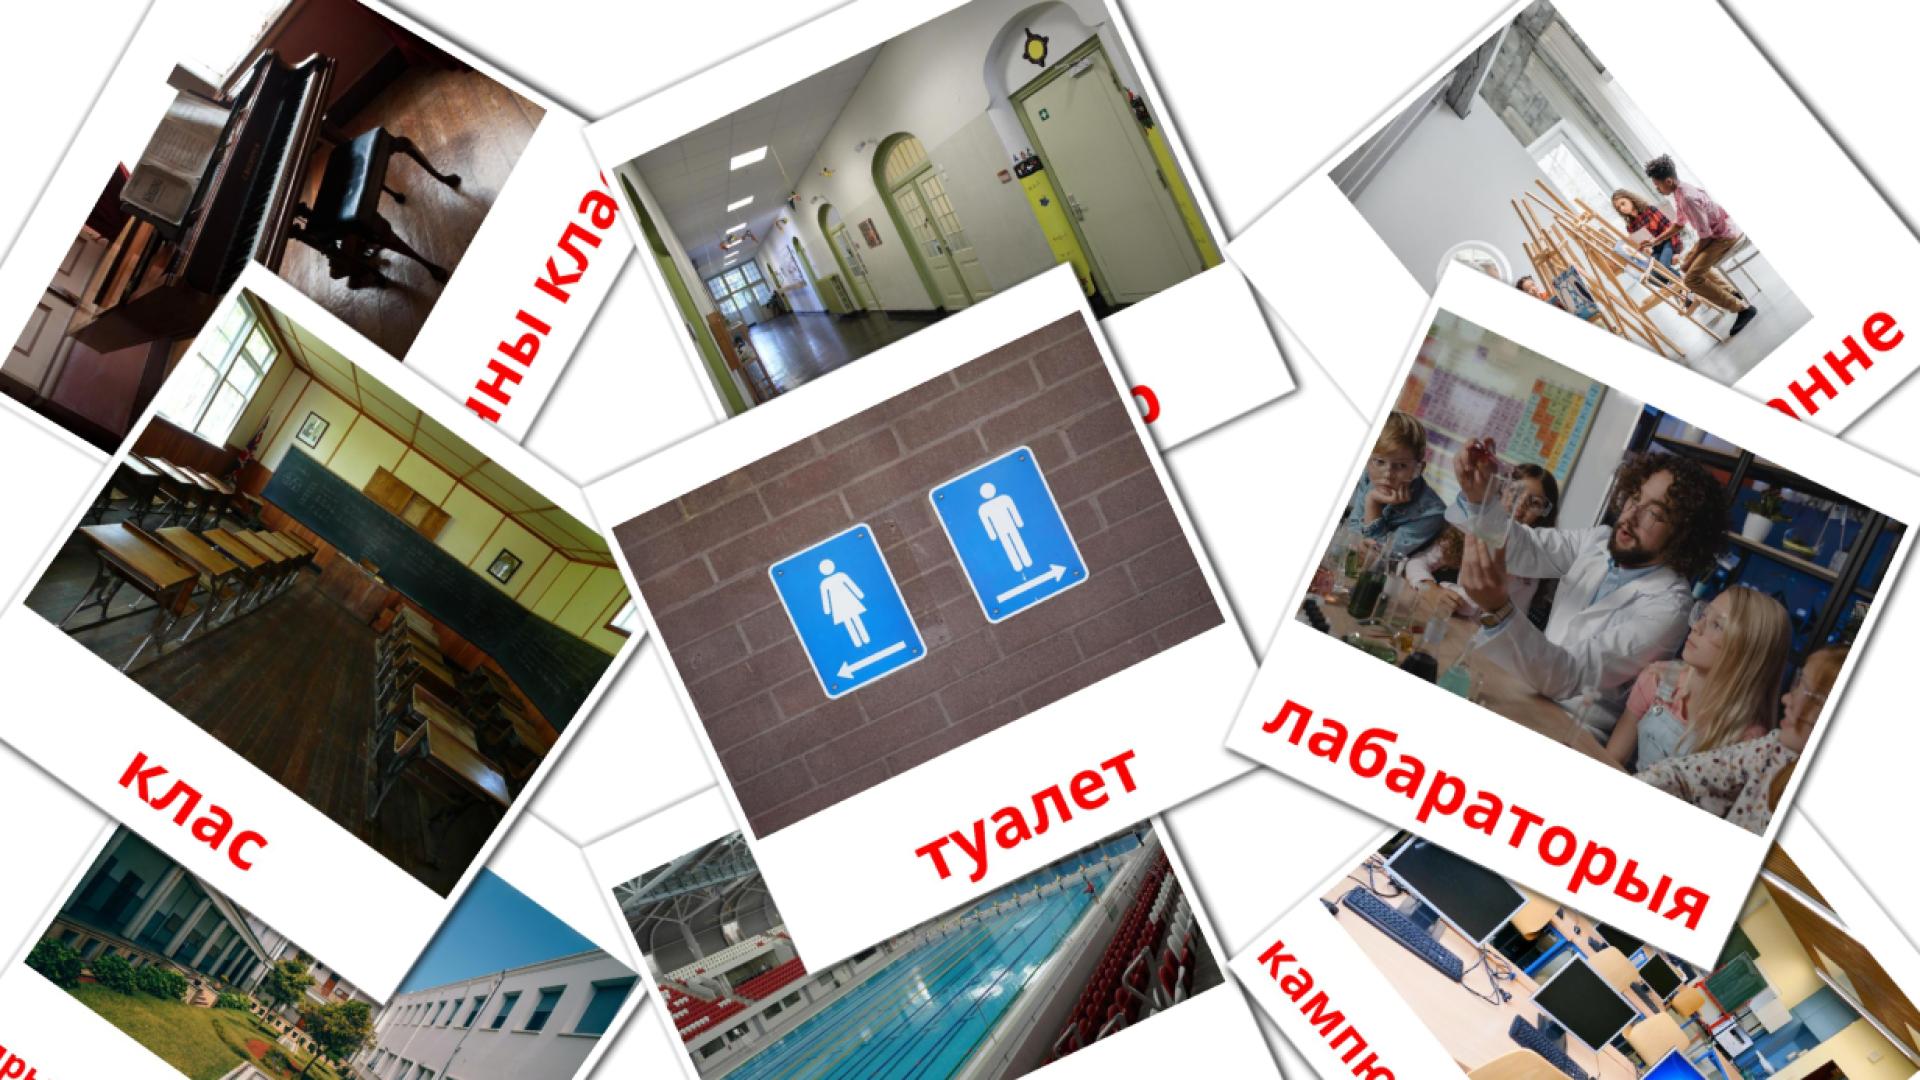 School building - belarusian vocabulary cards